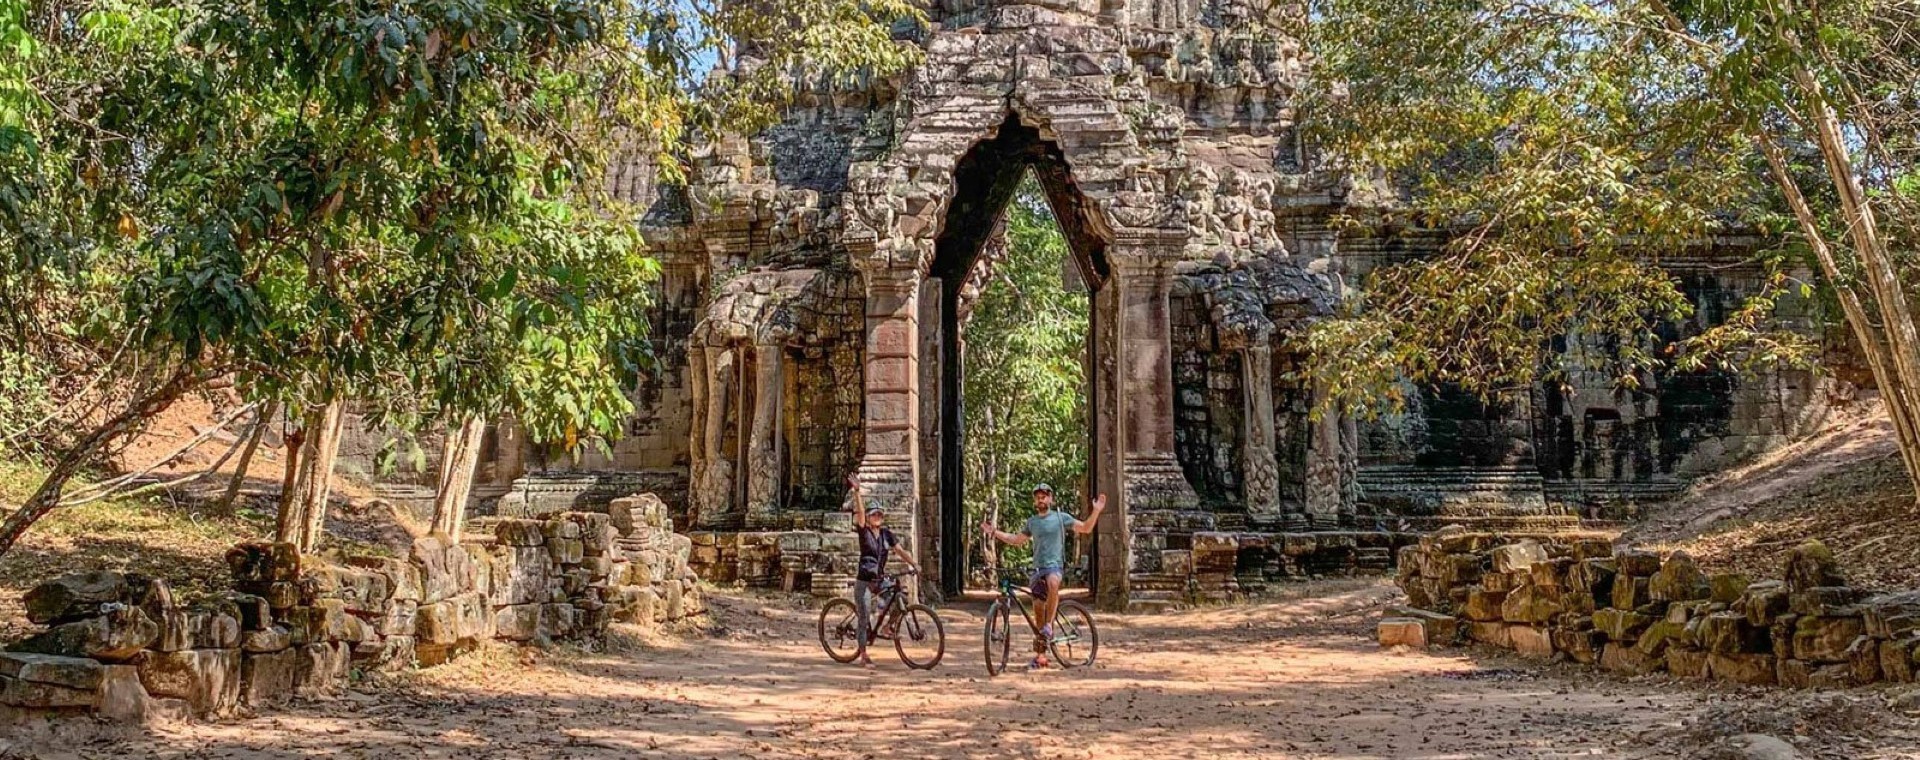 Cambodia Cycling Tour: Siem Reap 5 days 4 nights